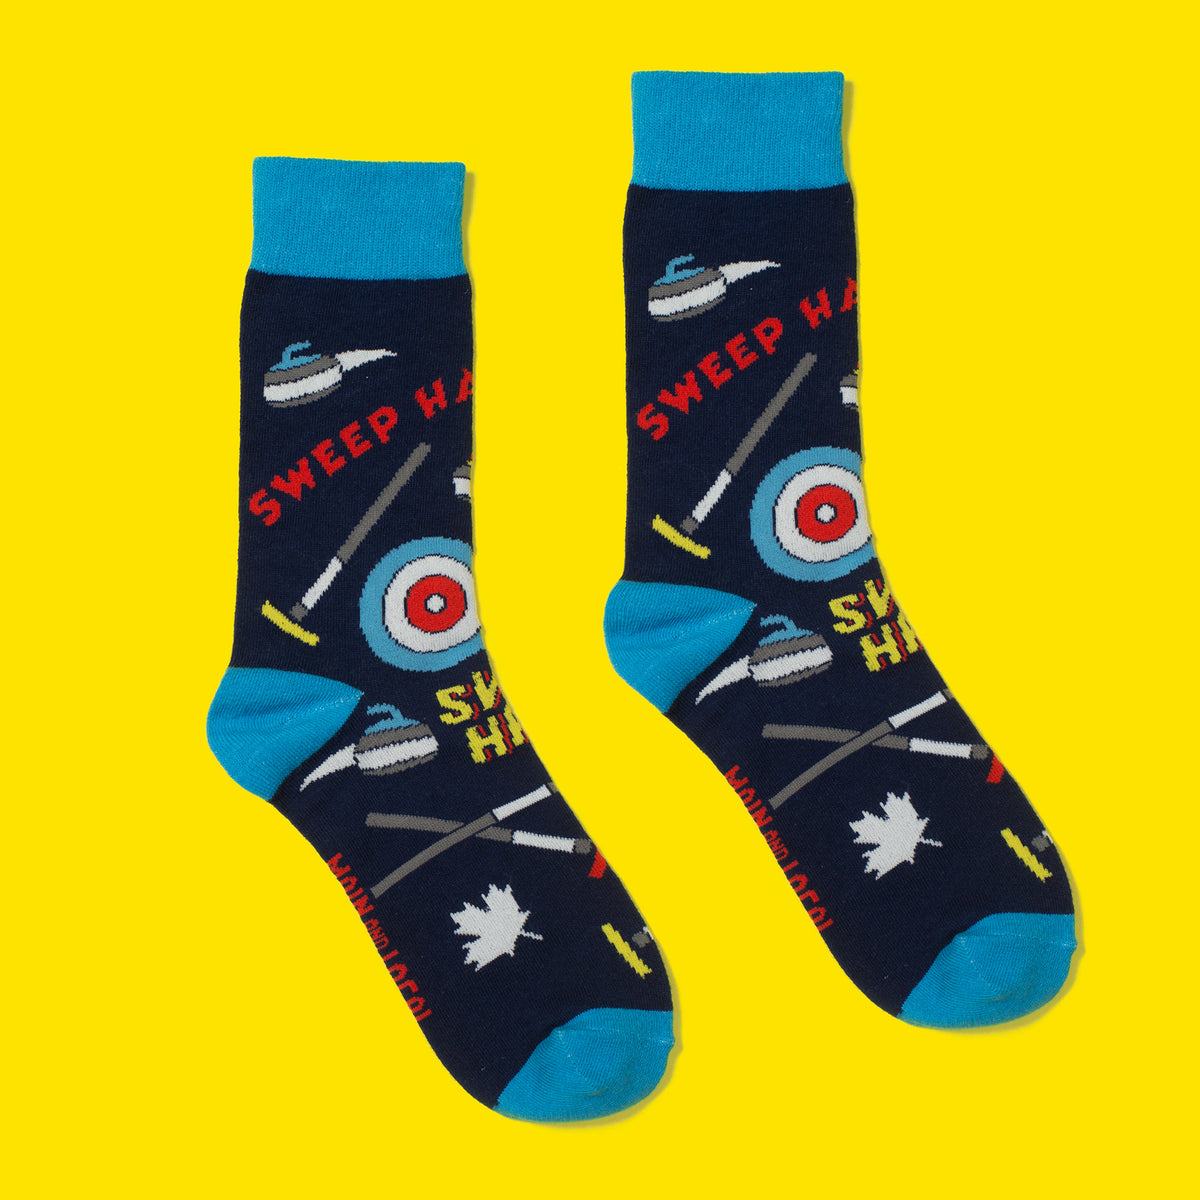 Canadian Curling Socks